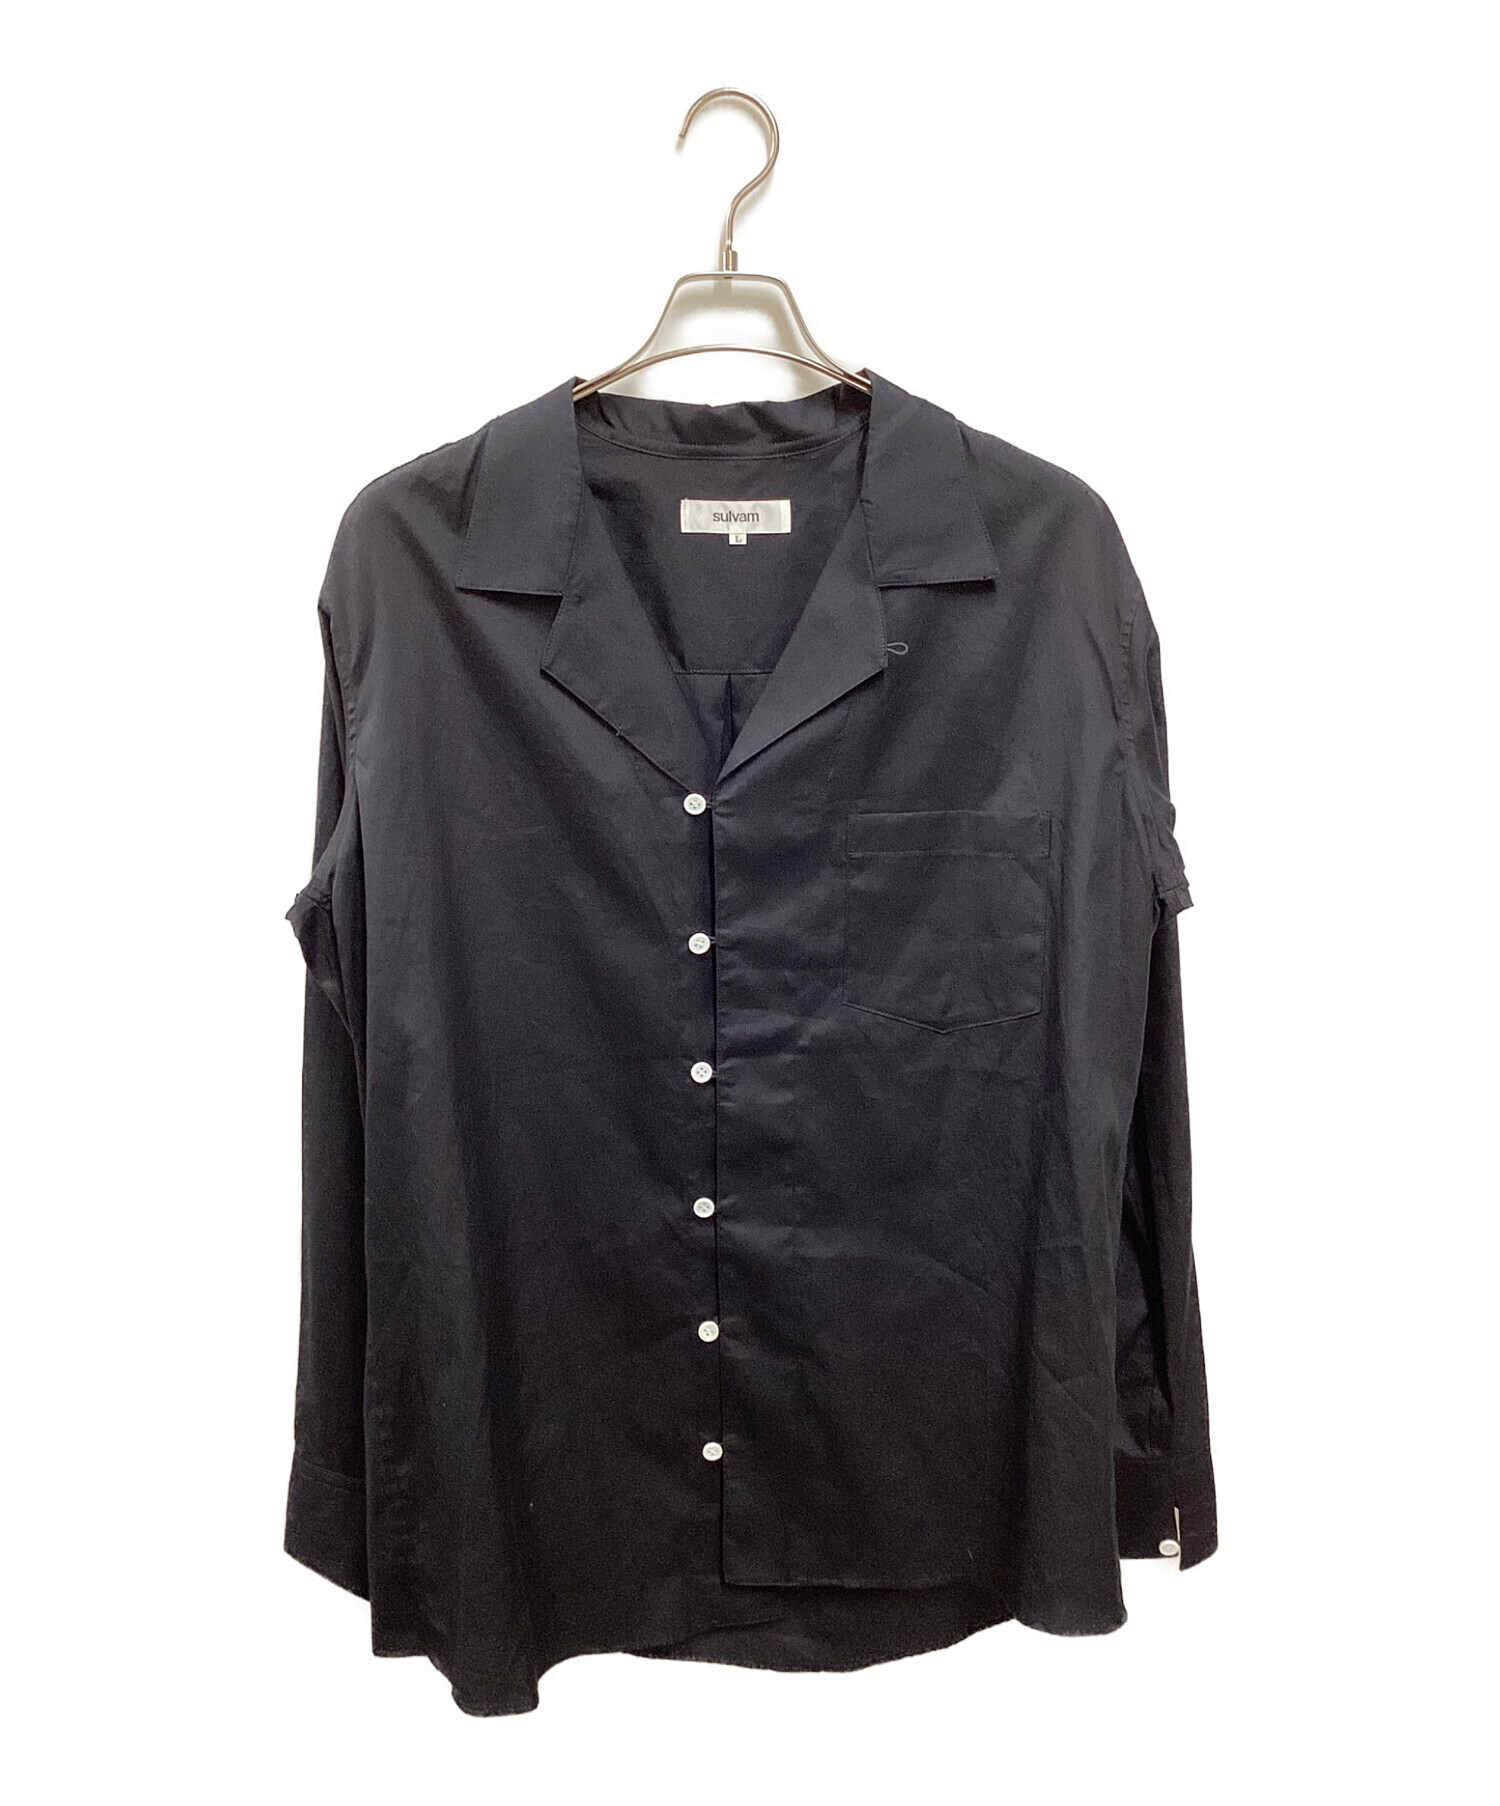 sulvam (サルバム) オープンカラー長袖シャツ ブラック サイズ:L